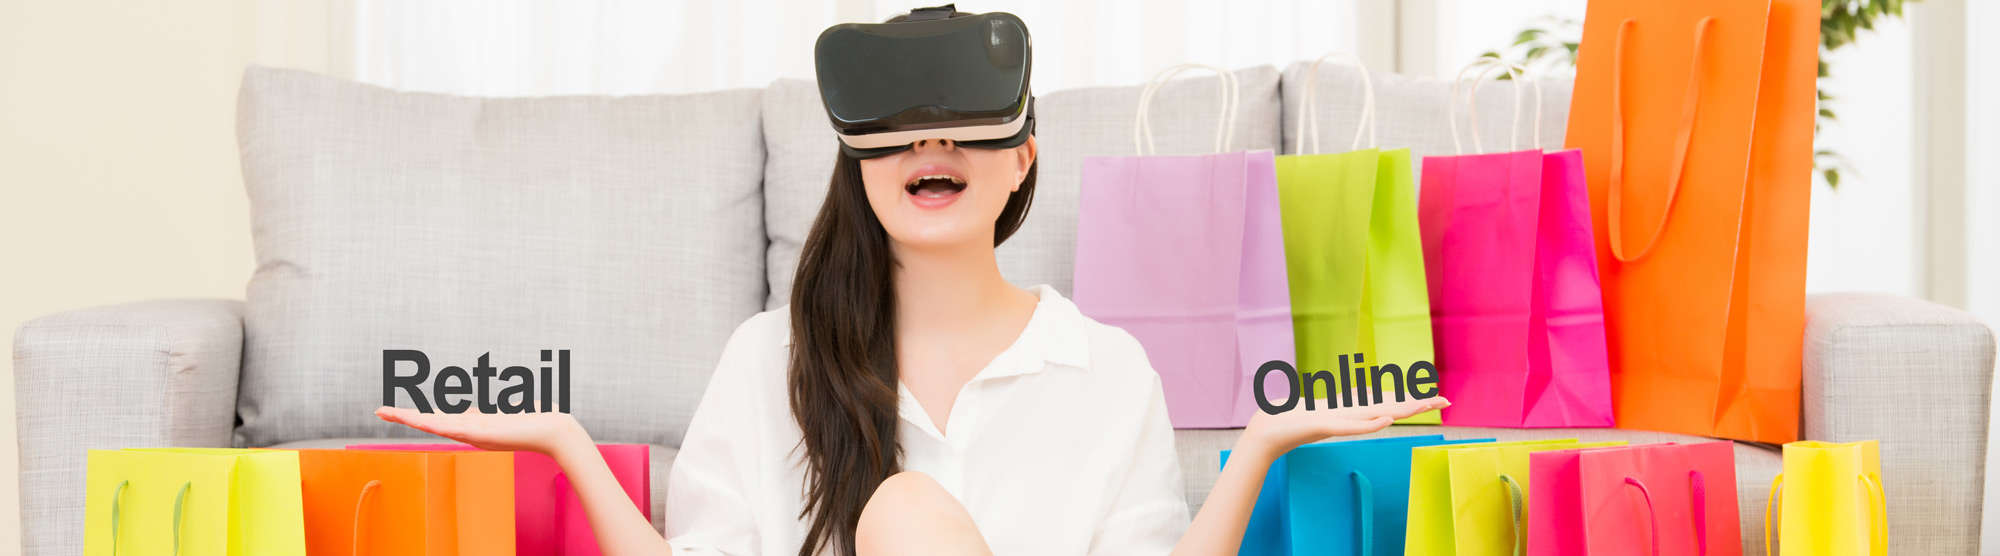 Virtual Reality Shopping